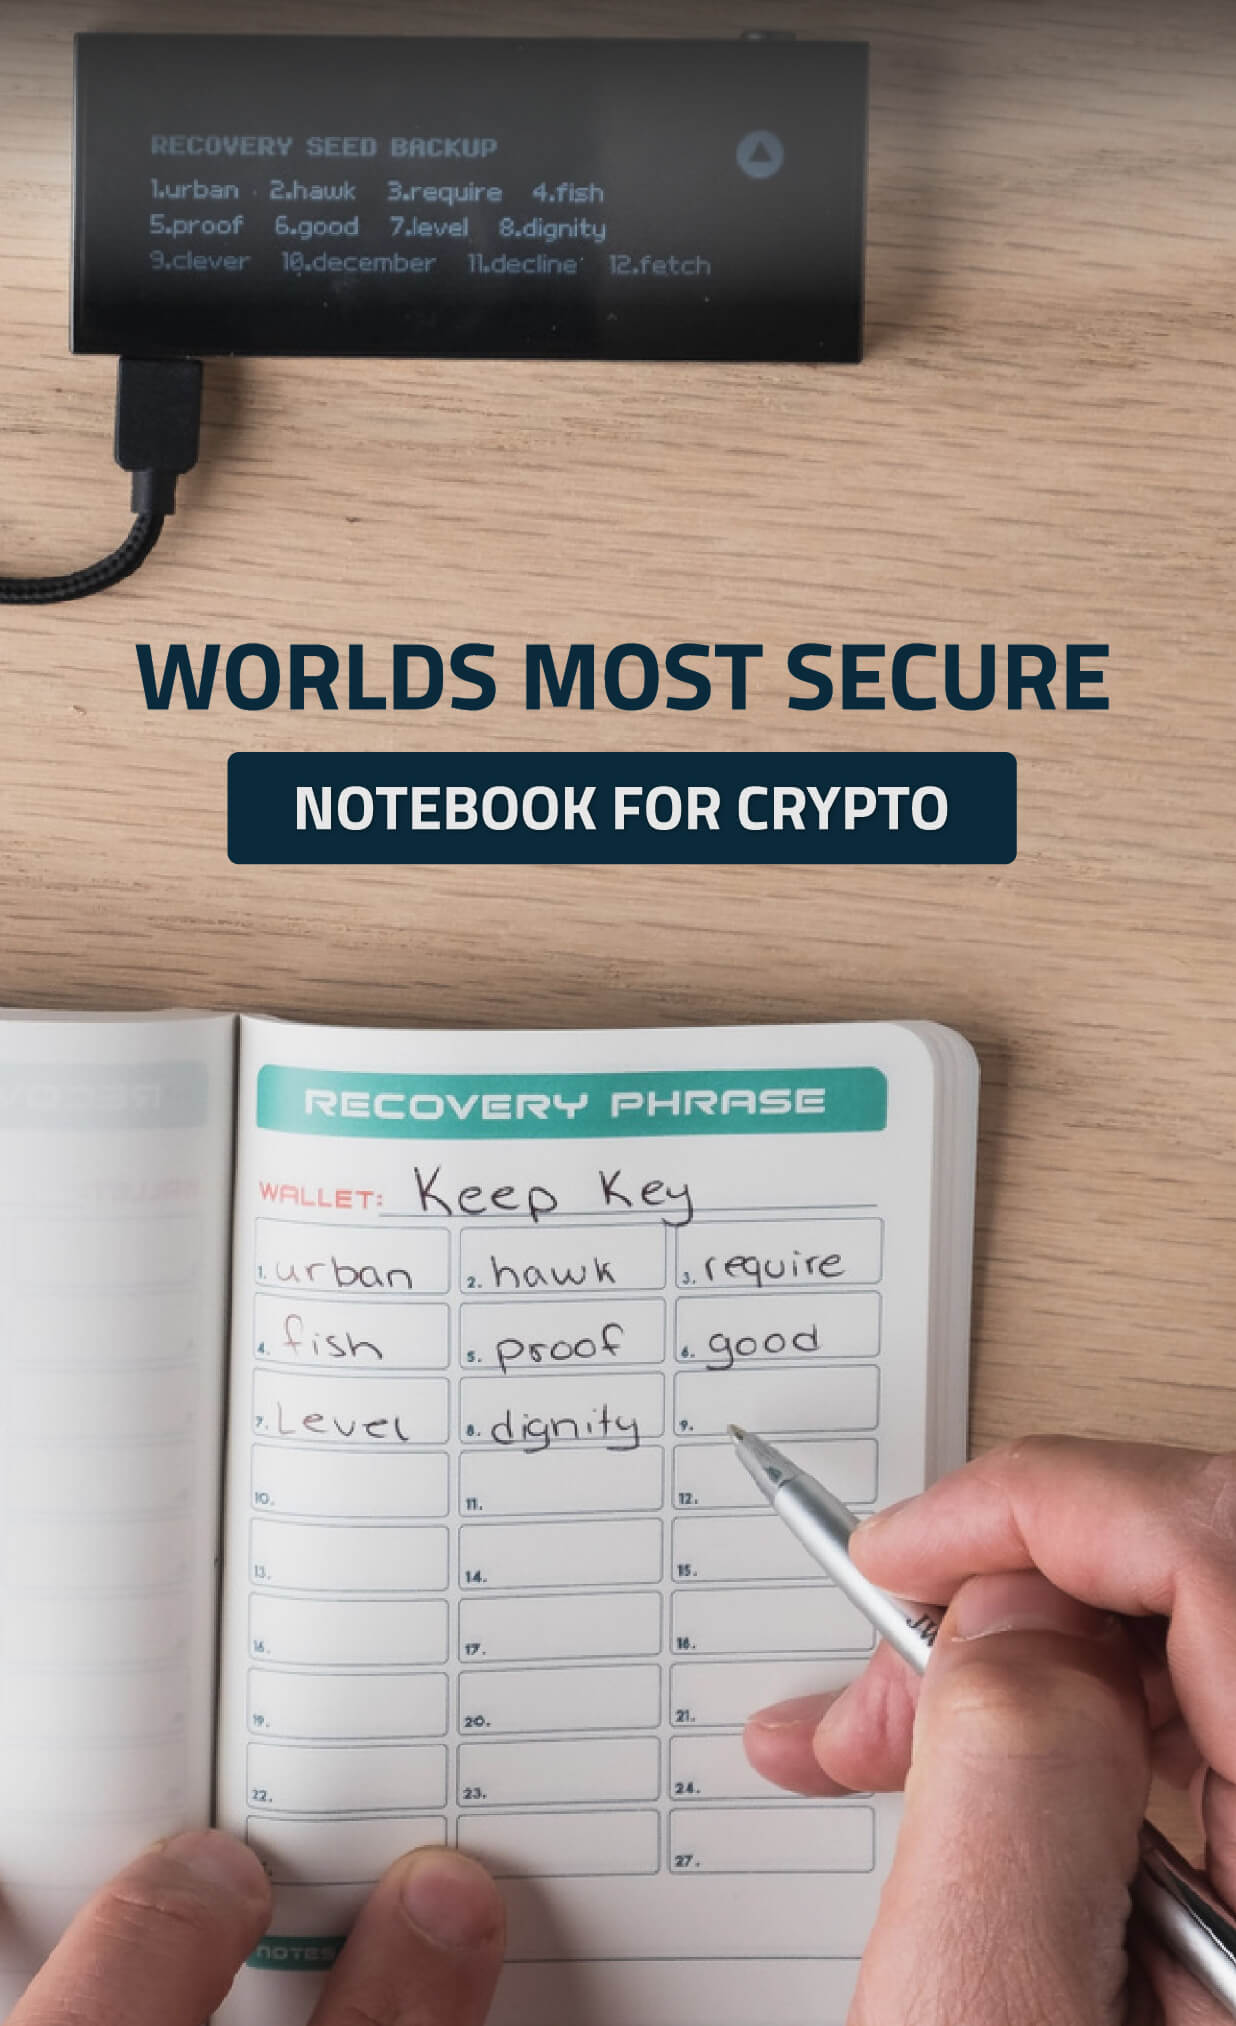 Shieldfolio Stonebook & Ghost Pen - Ultimate Crypto Storage